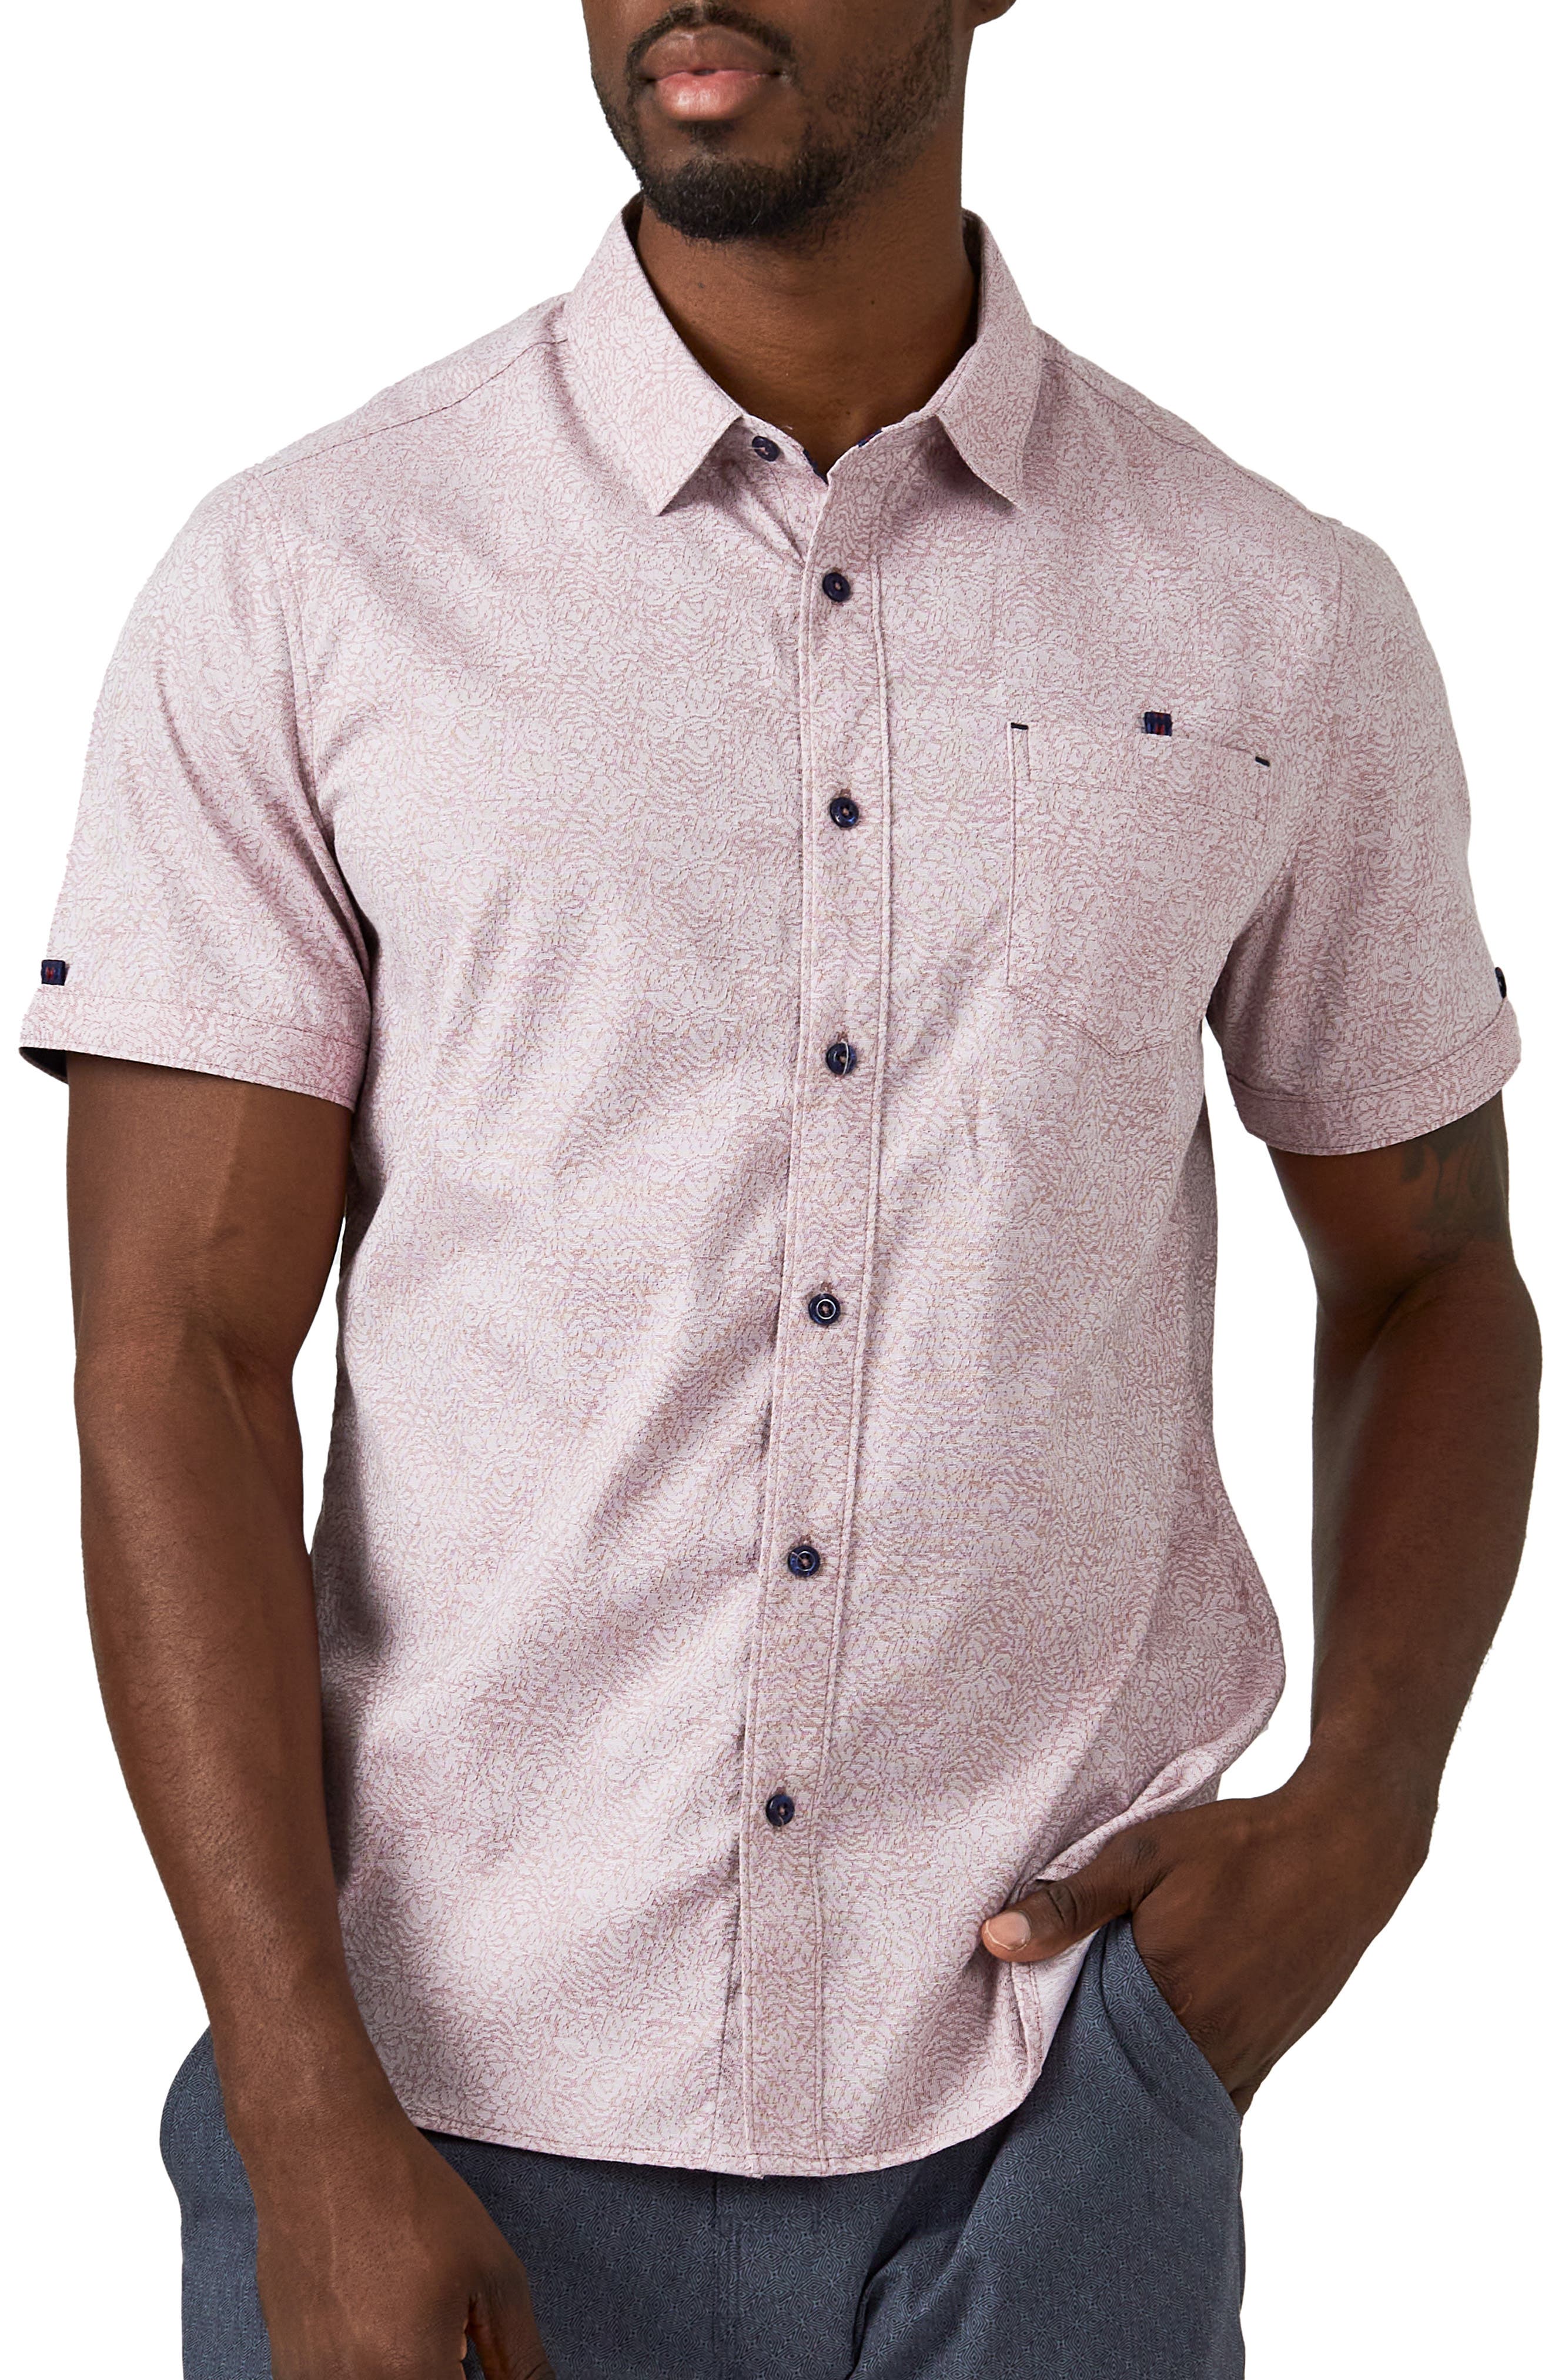 Obey Riveria Woven Black Multi Button Down S/S Mens Shirt 